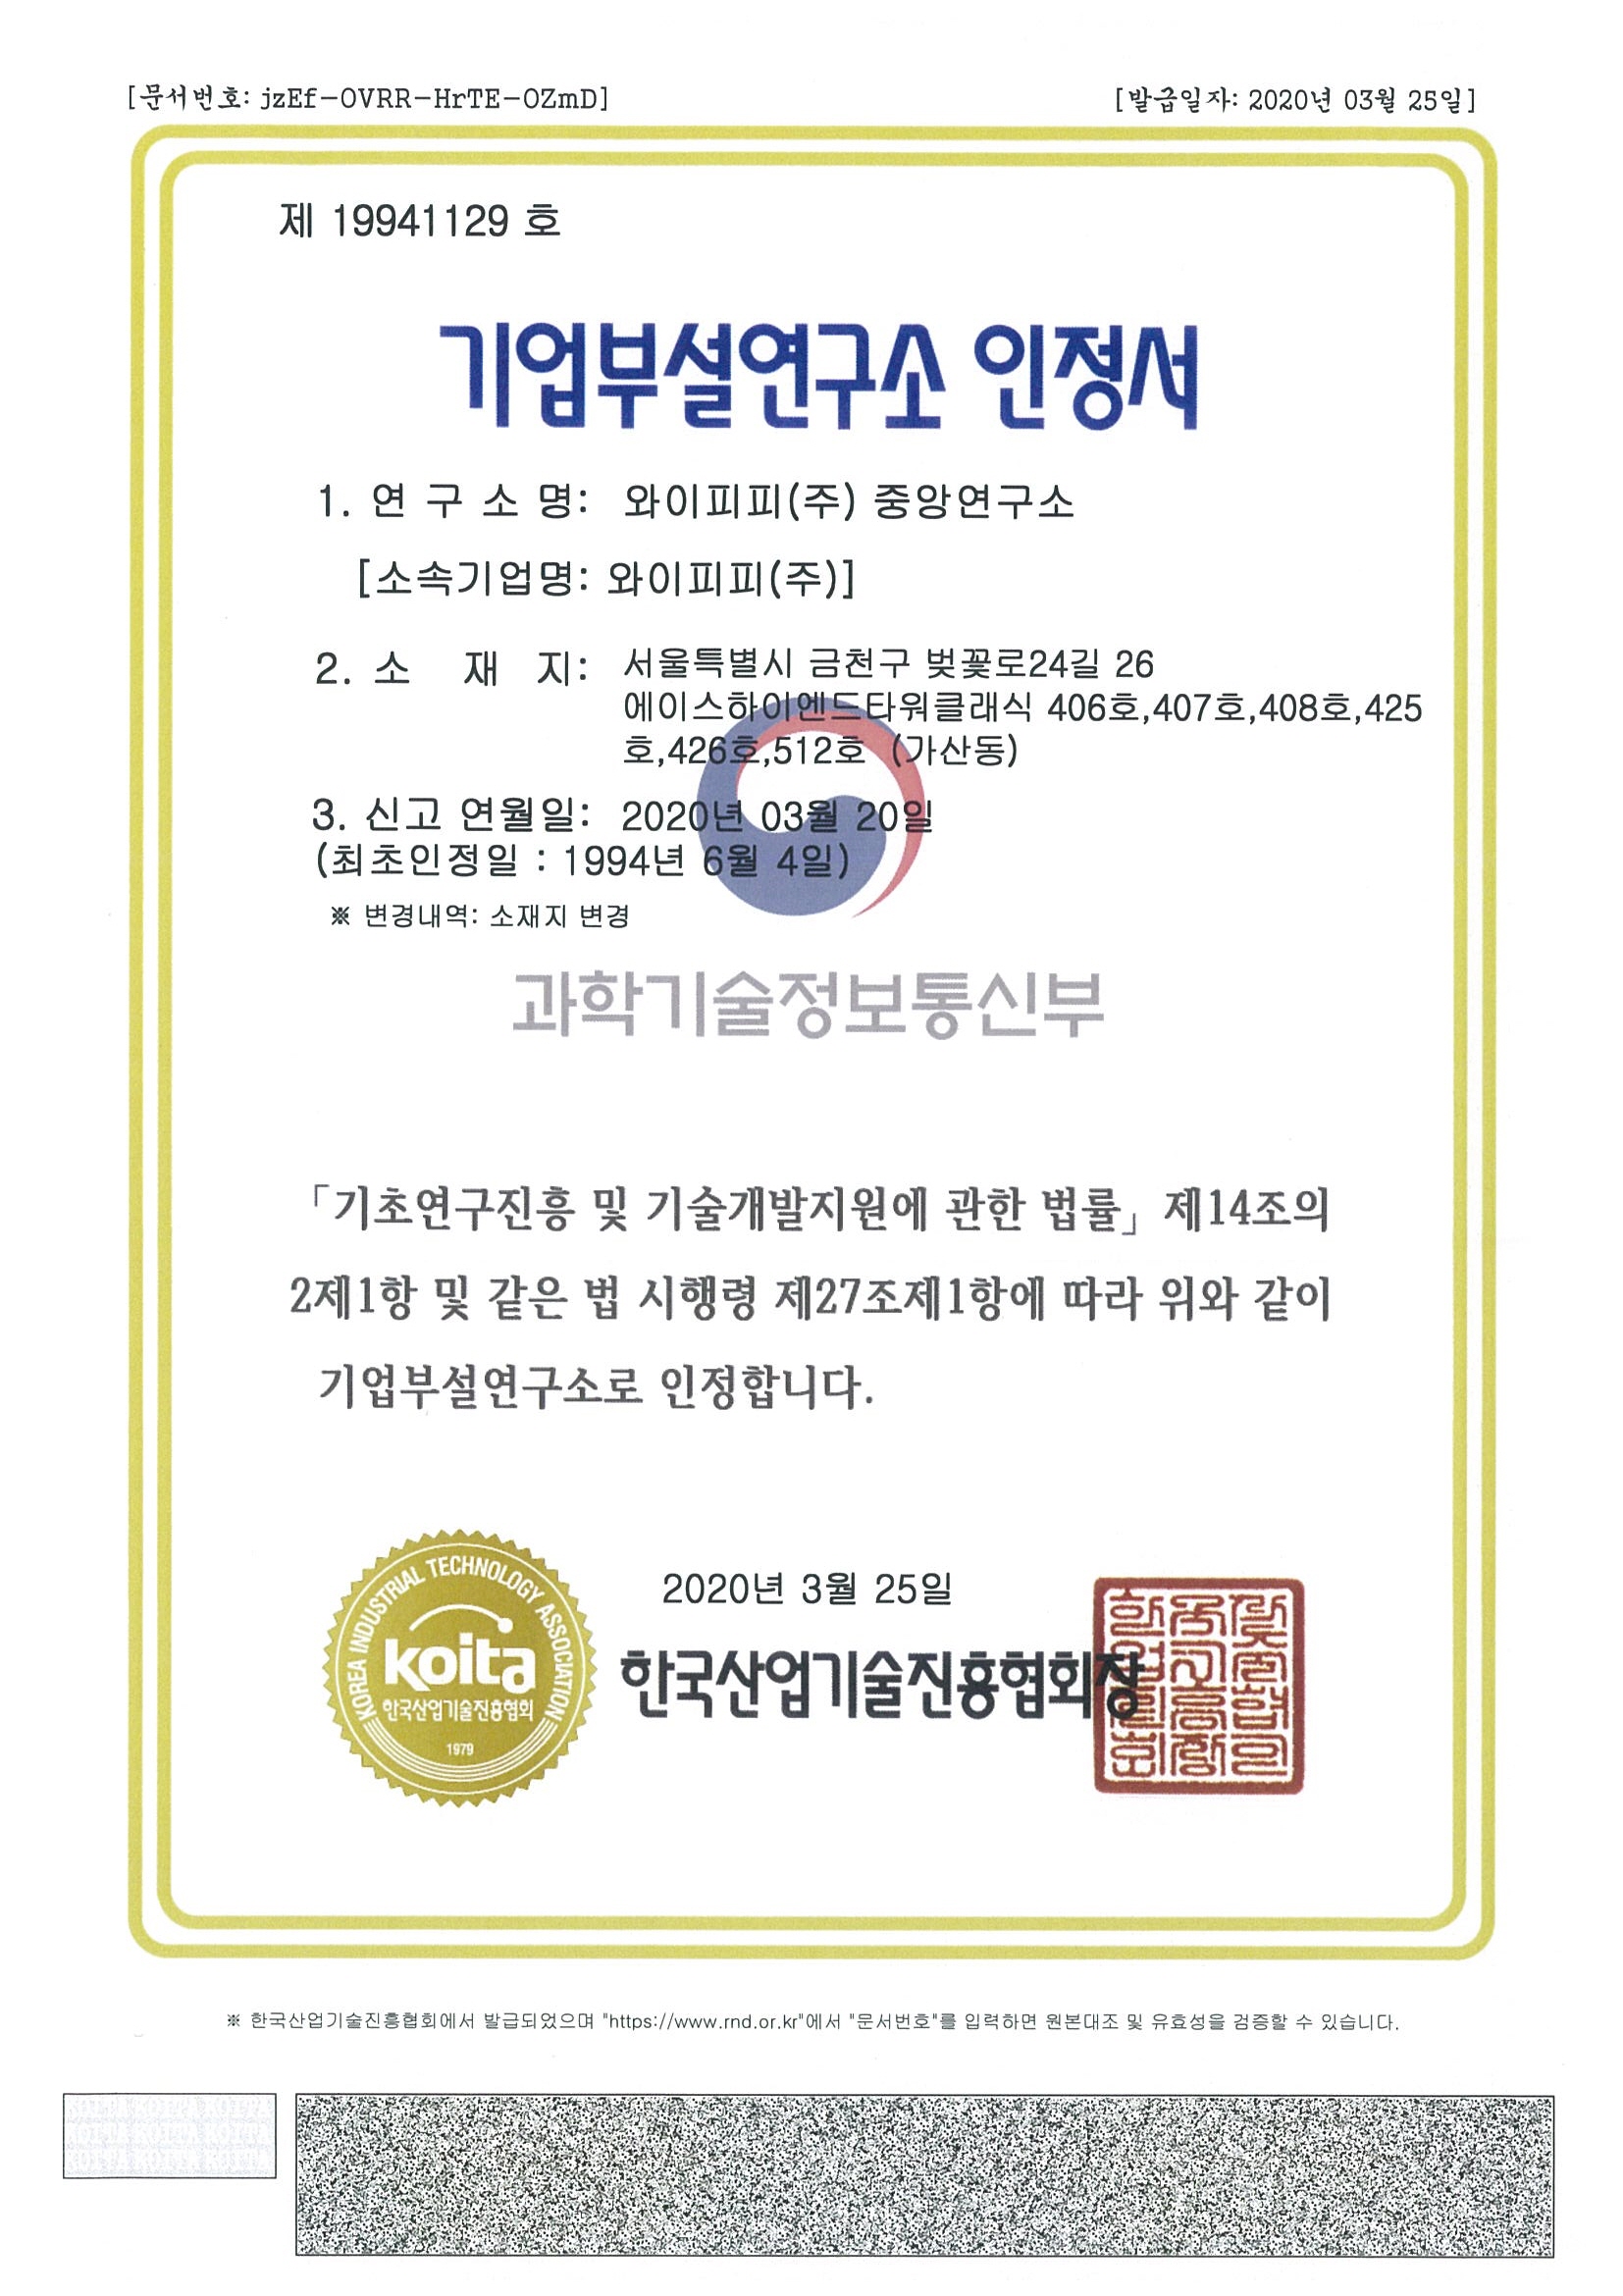 Certificate of company affiliated research institute.jpg